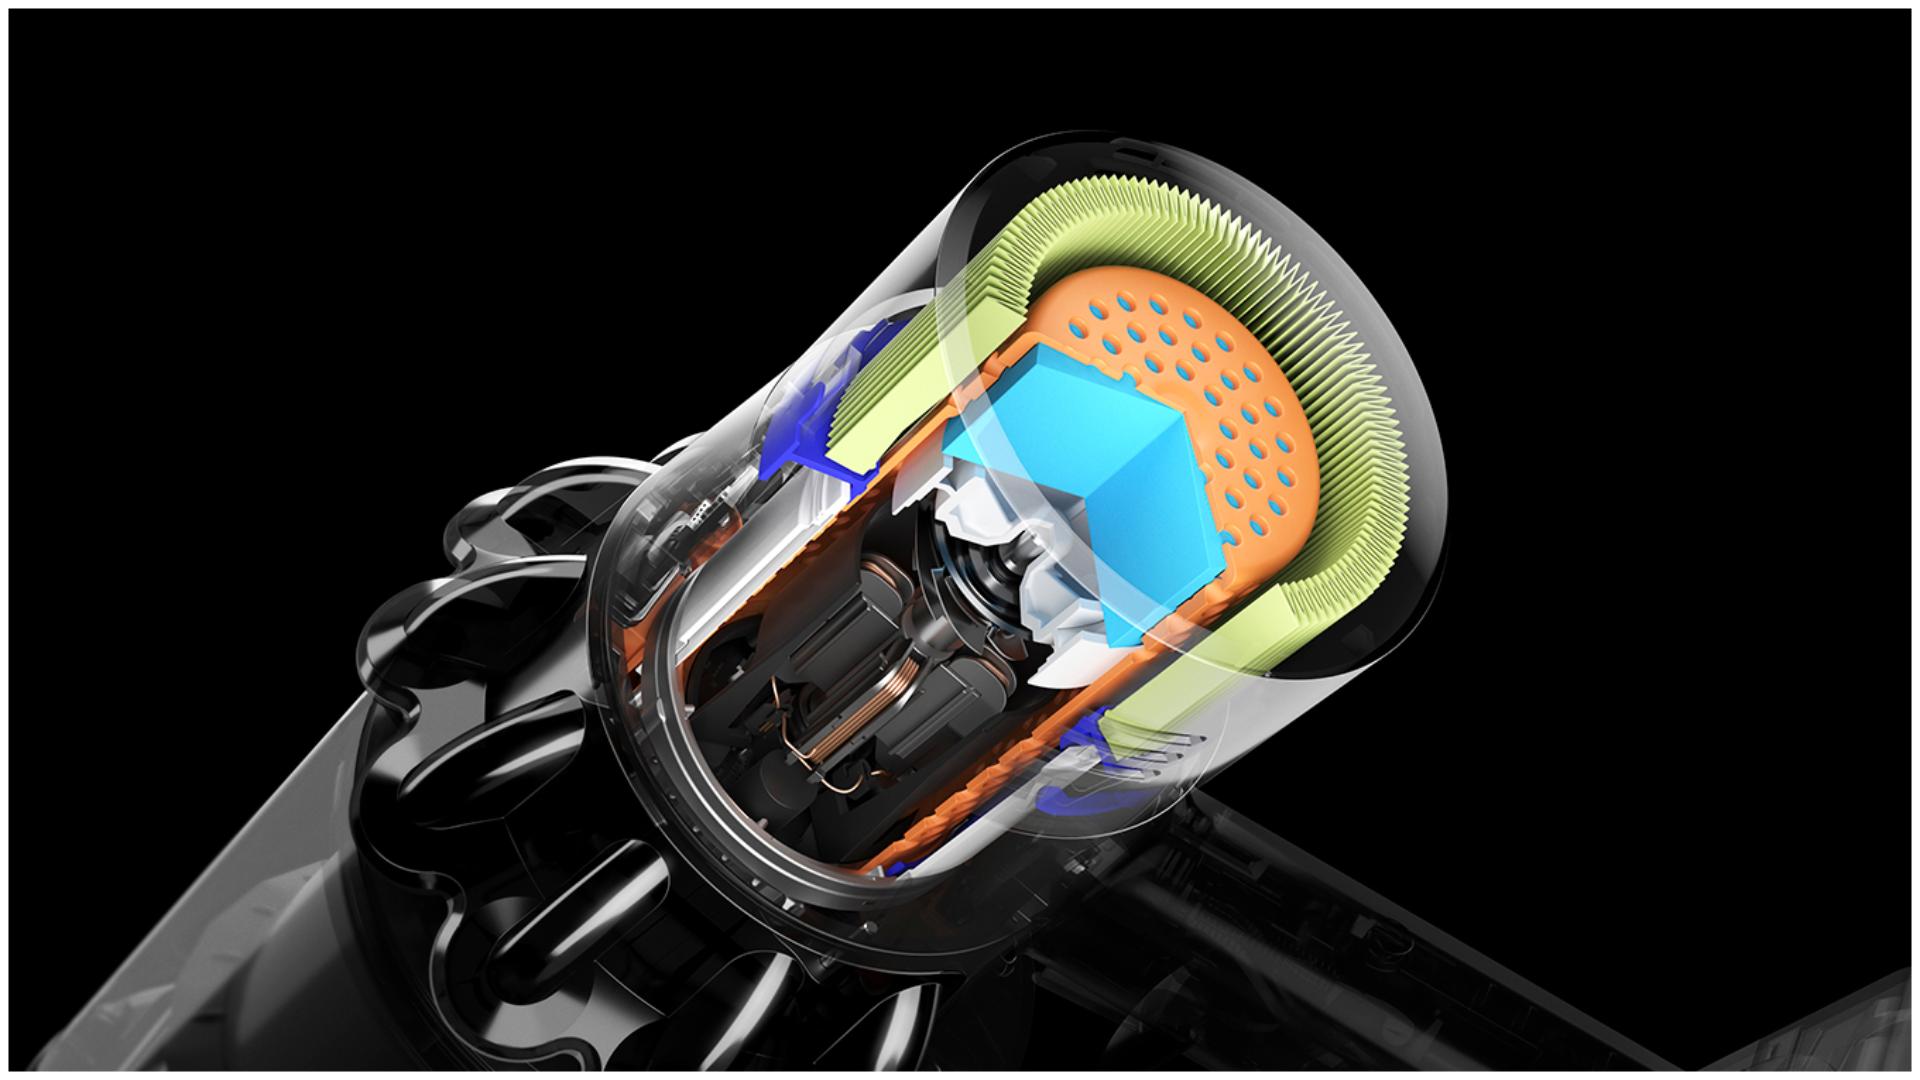 Dyson V11 vacuum acoustic engineering technology cutaway